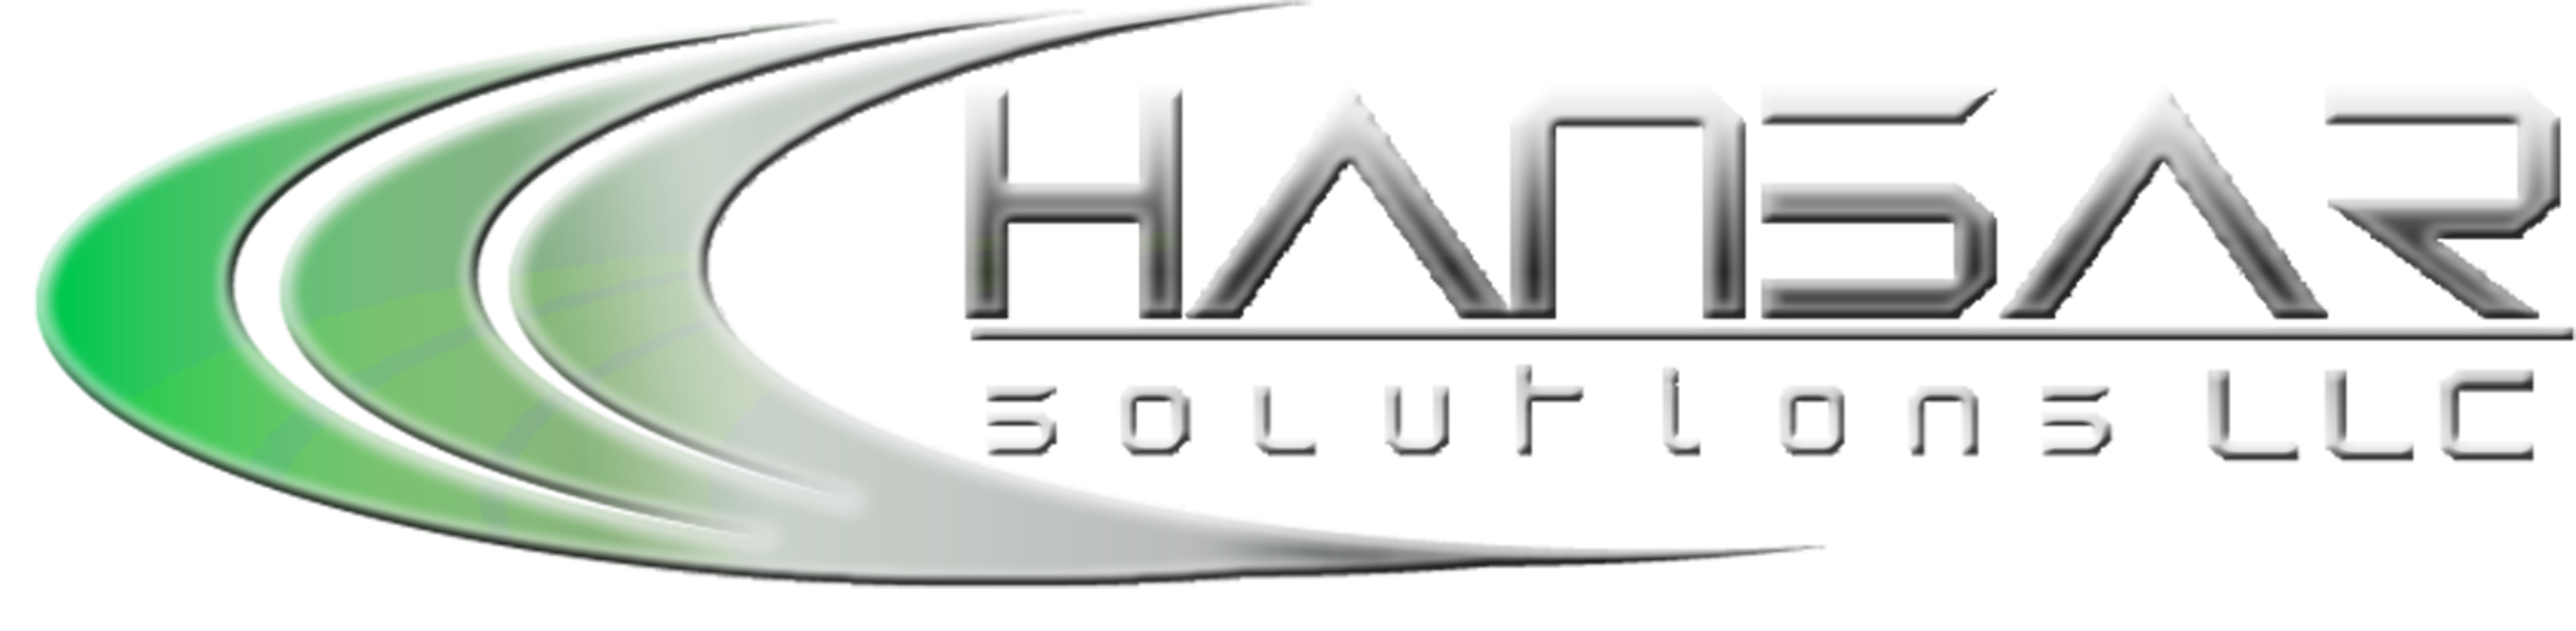 Hansar Solutions LLC - Computer Services - POS - Hardware - Software - Mainframe - Graphic Desing